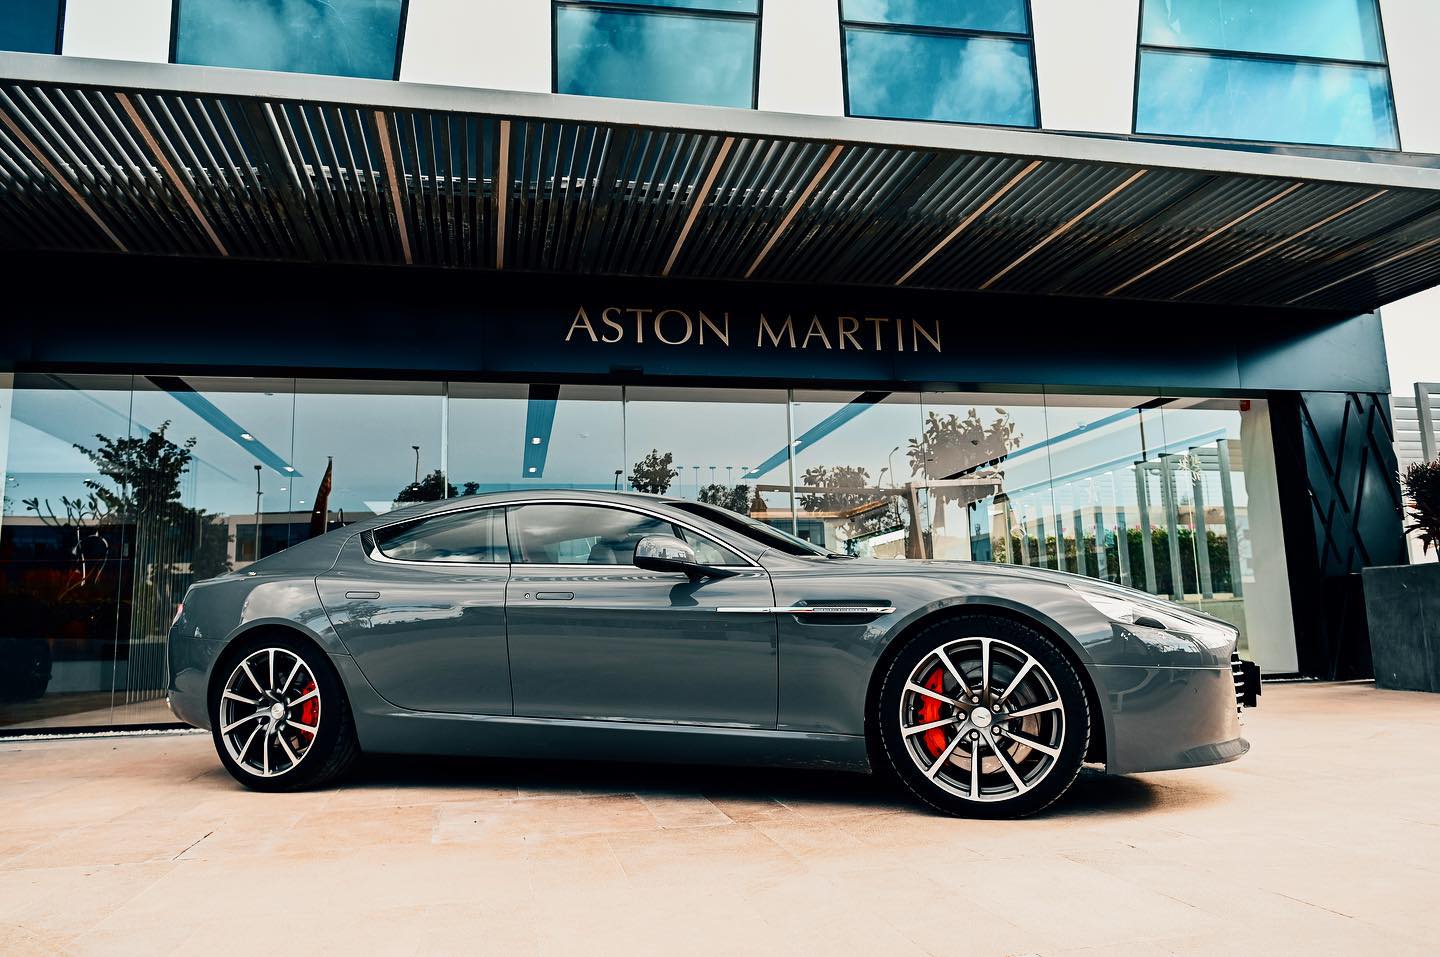 Aston Martin Showroom